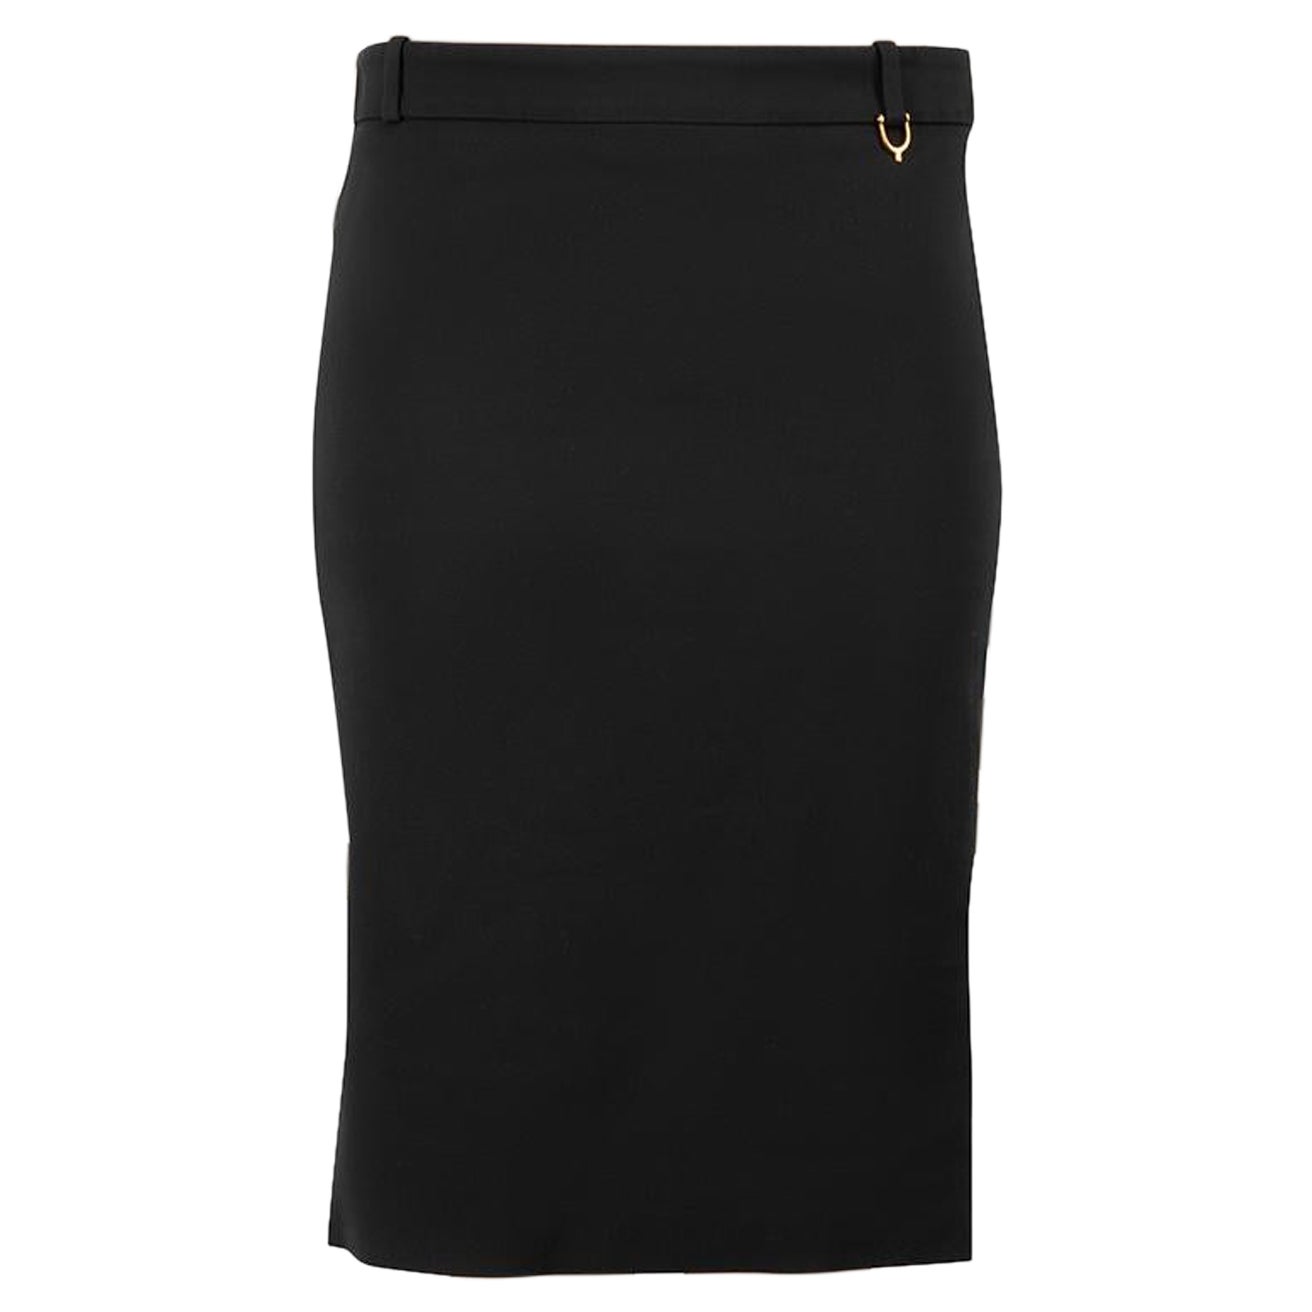 Gucci Black Horsebit Accent Pencil Skirt Size S